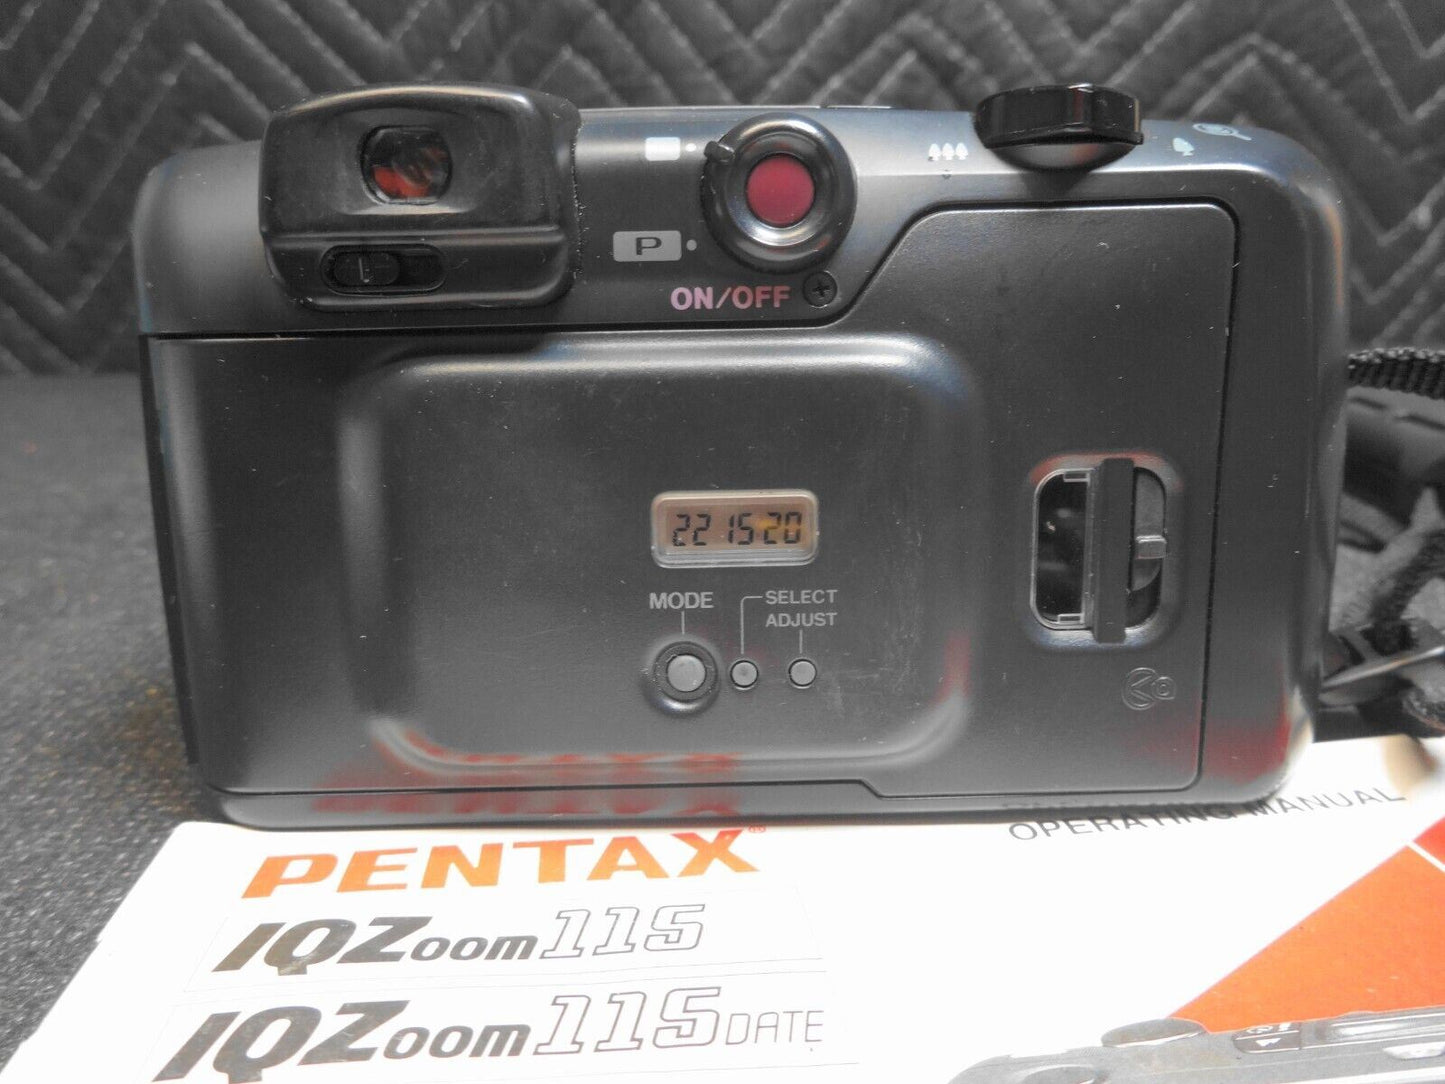 Pentax IQZoom 115 35mm Film Camera 38-115mm w/Remote & Manual - Point & Shoot